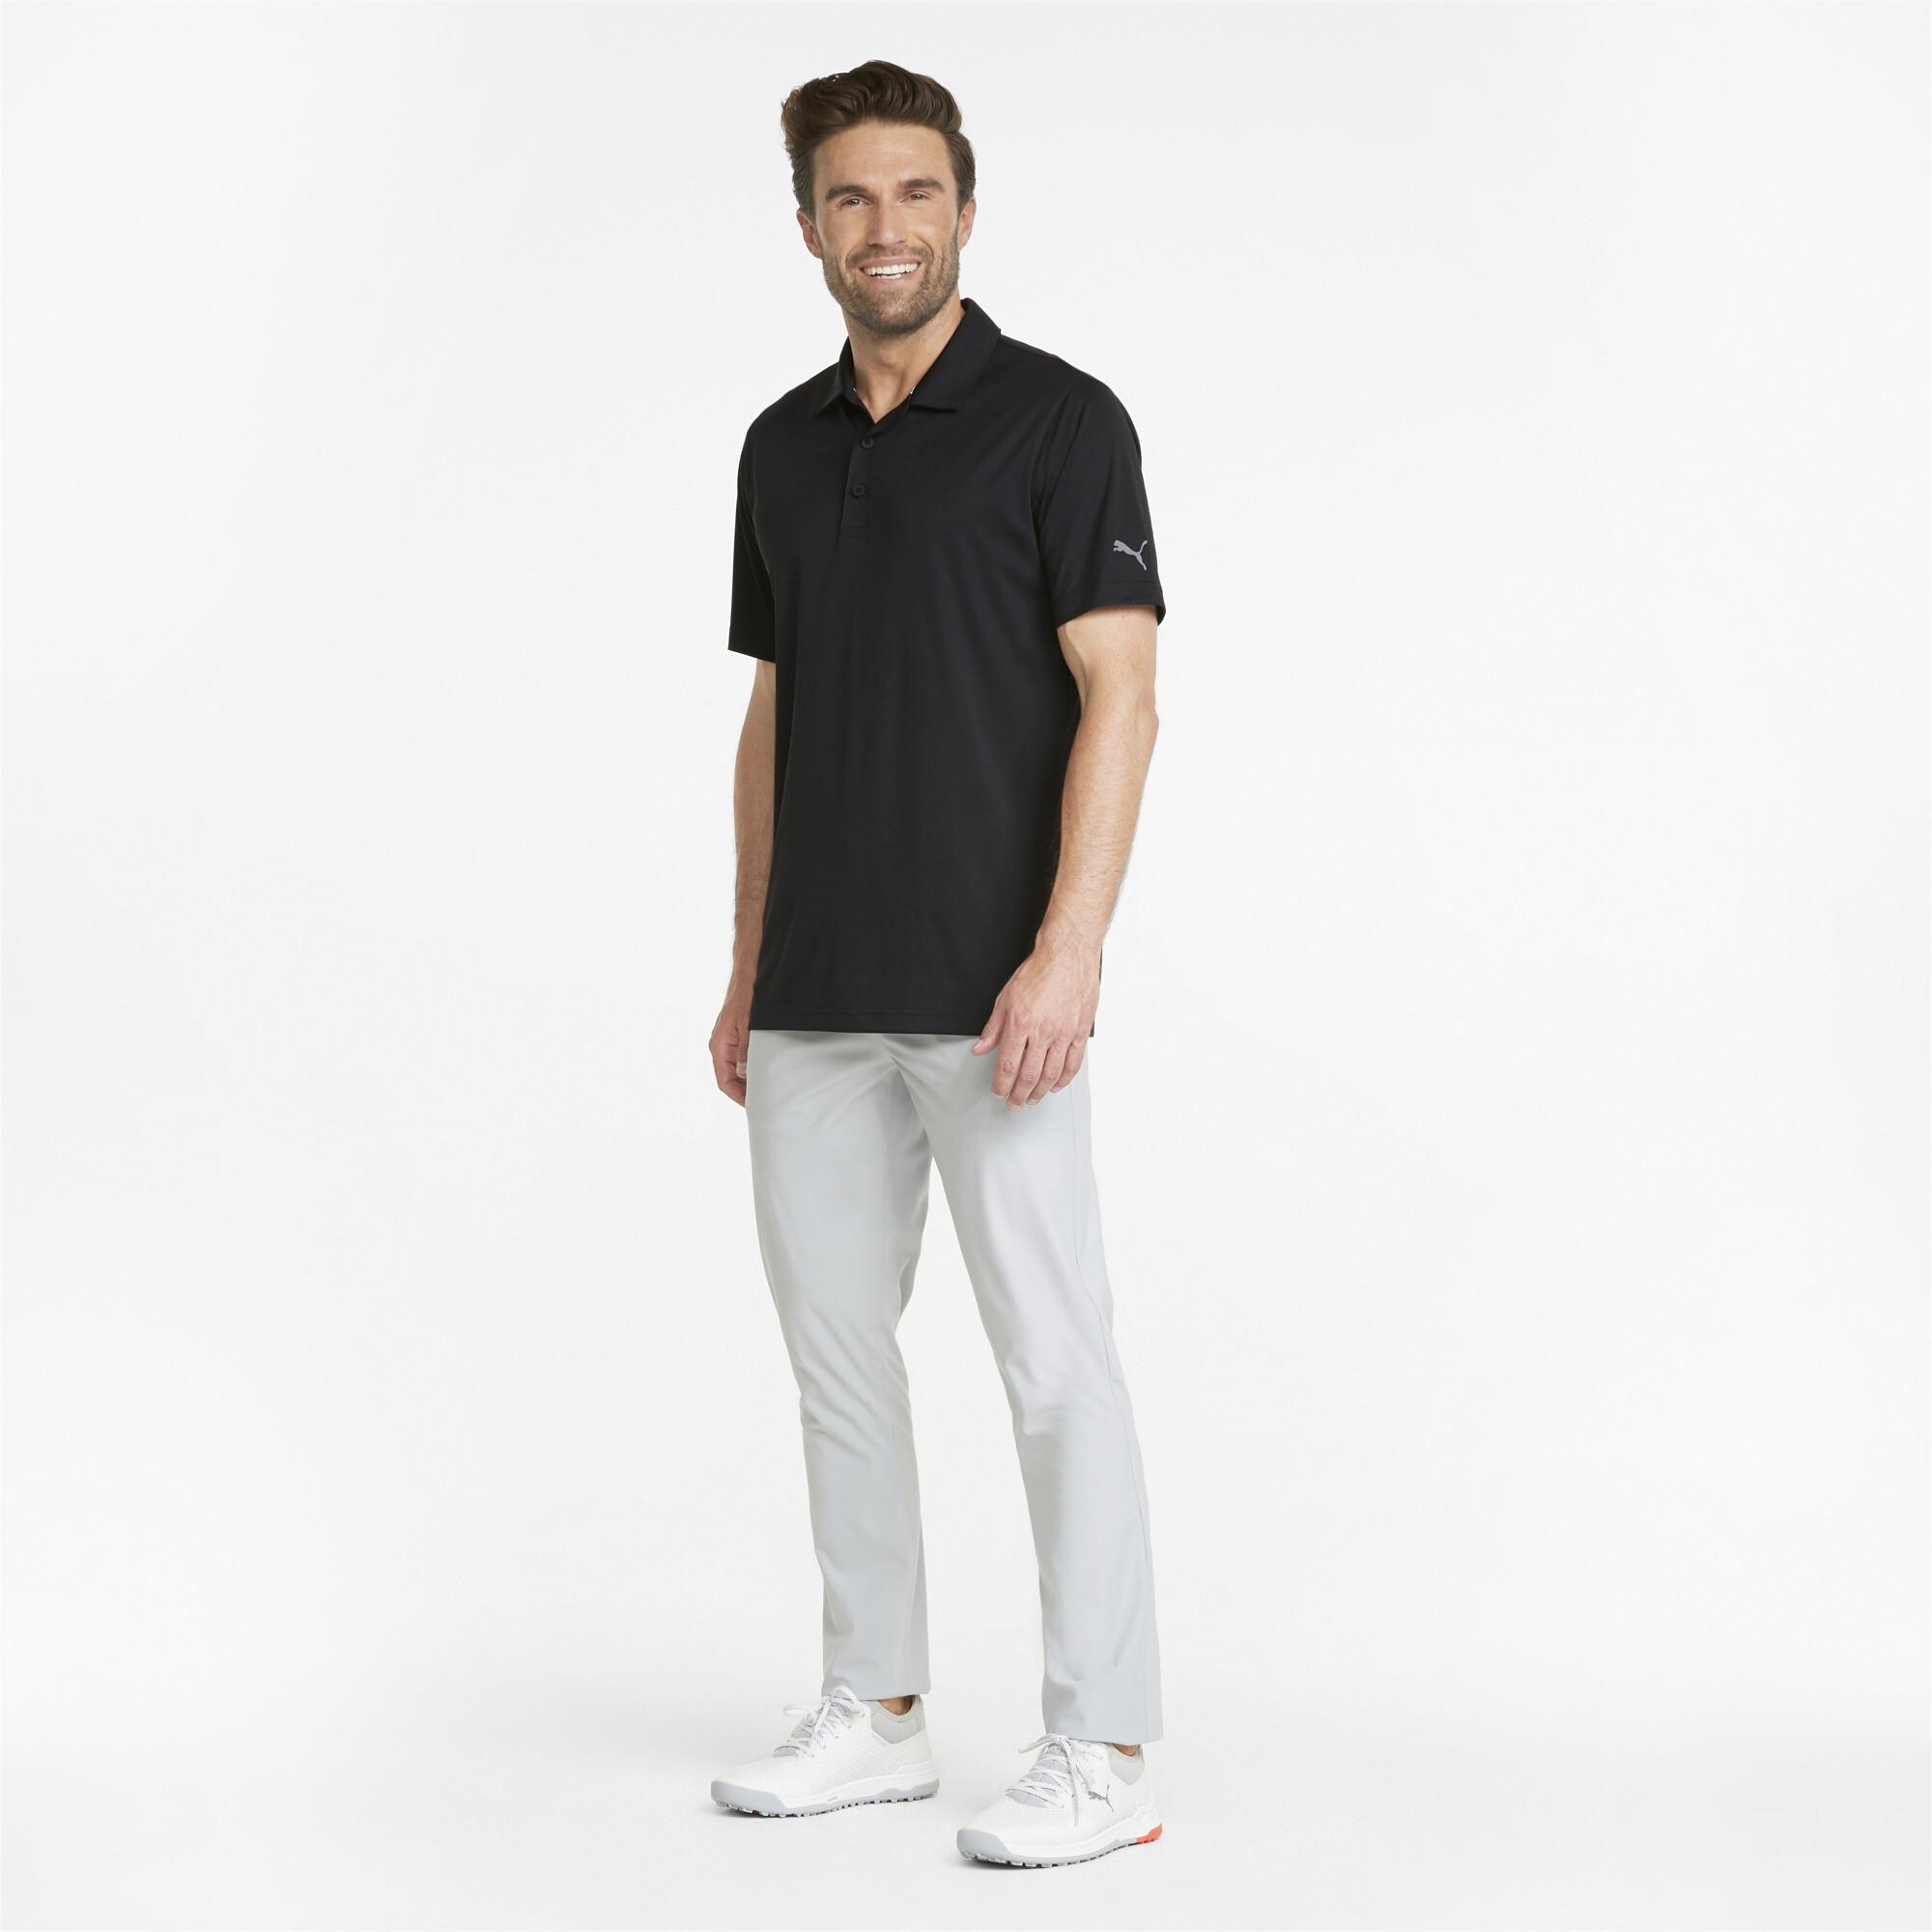 Men's Puma Gamer's Golf Polo Shirt T-Shirt, Black T-Shirt, Size S T-Shirt, Clothing